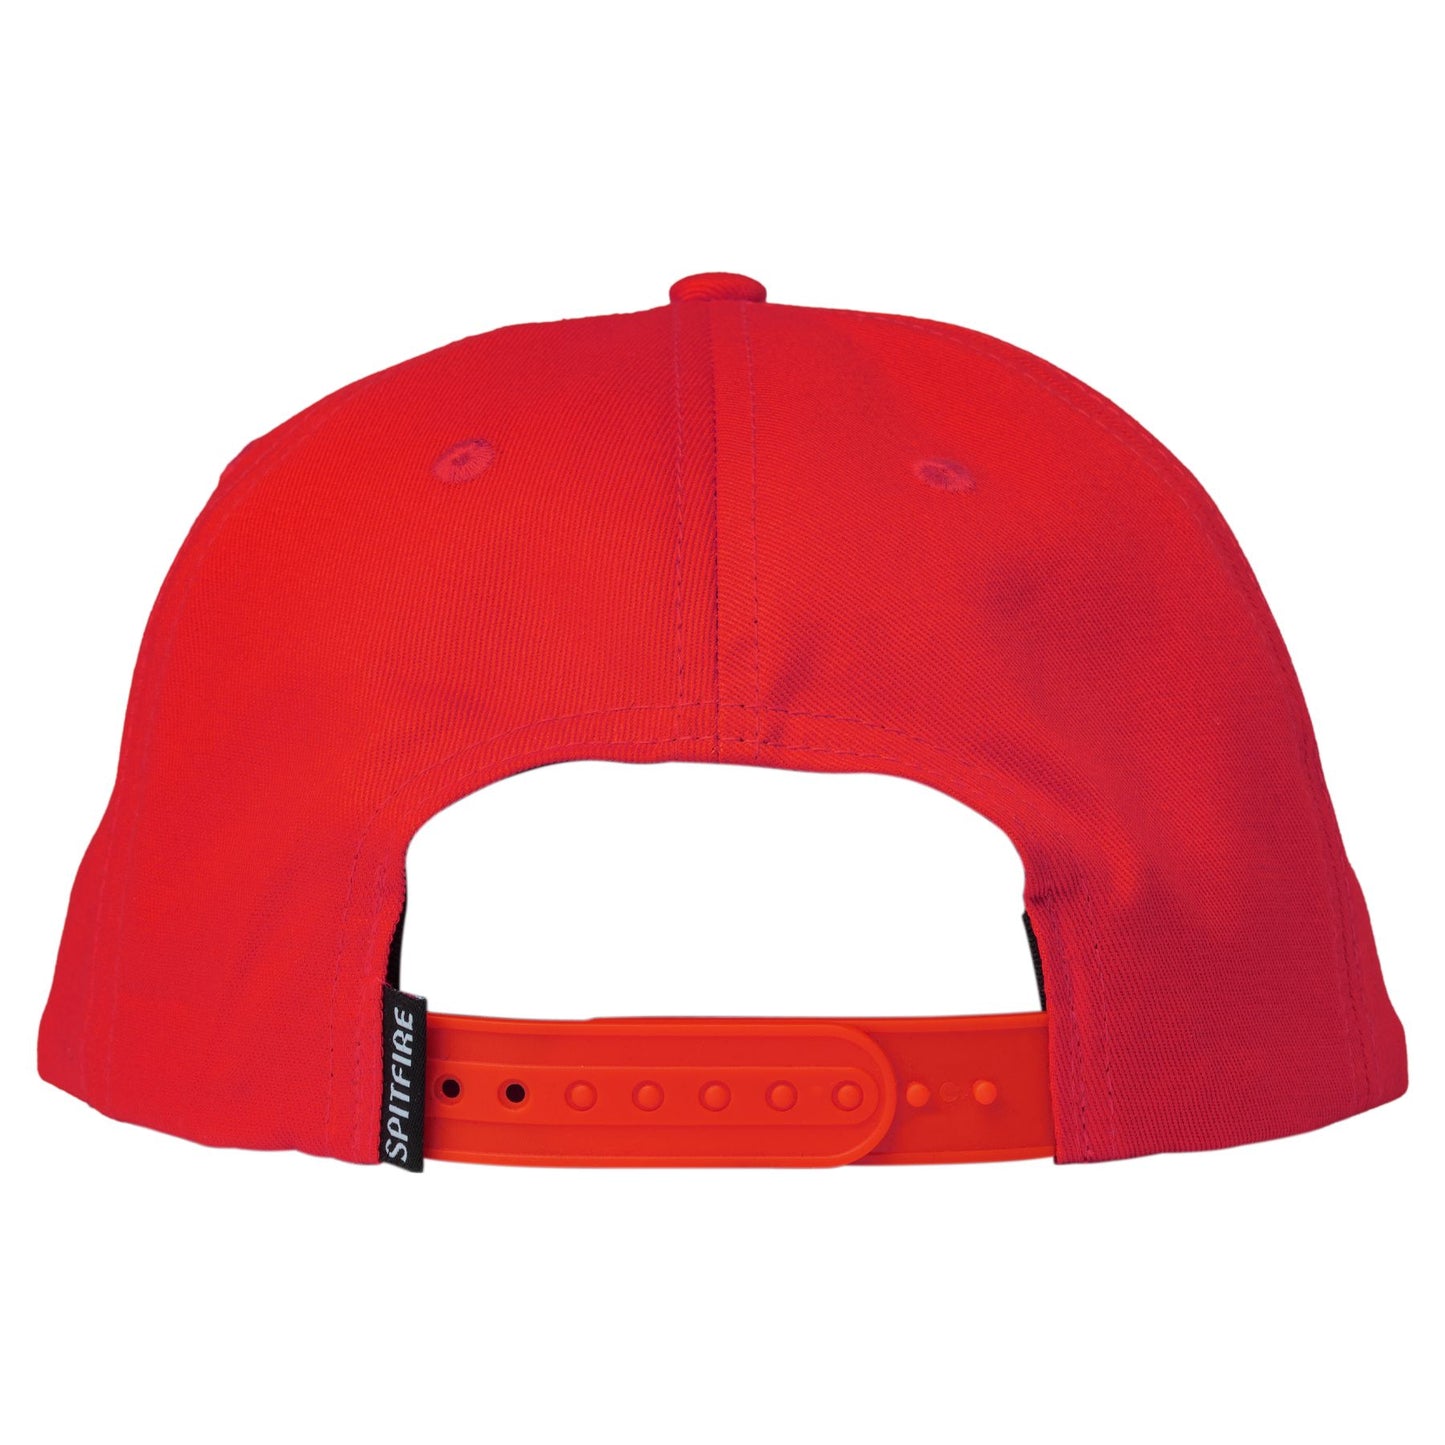 Spitfire Bighead Snapback Hat - Red/Black